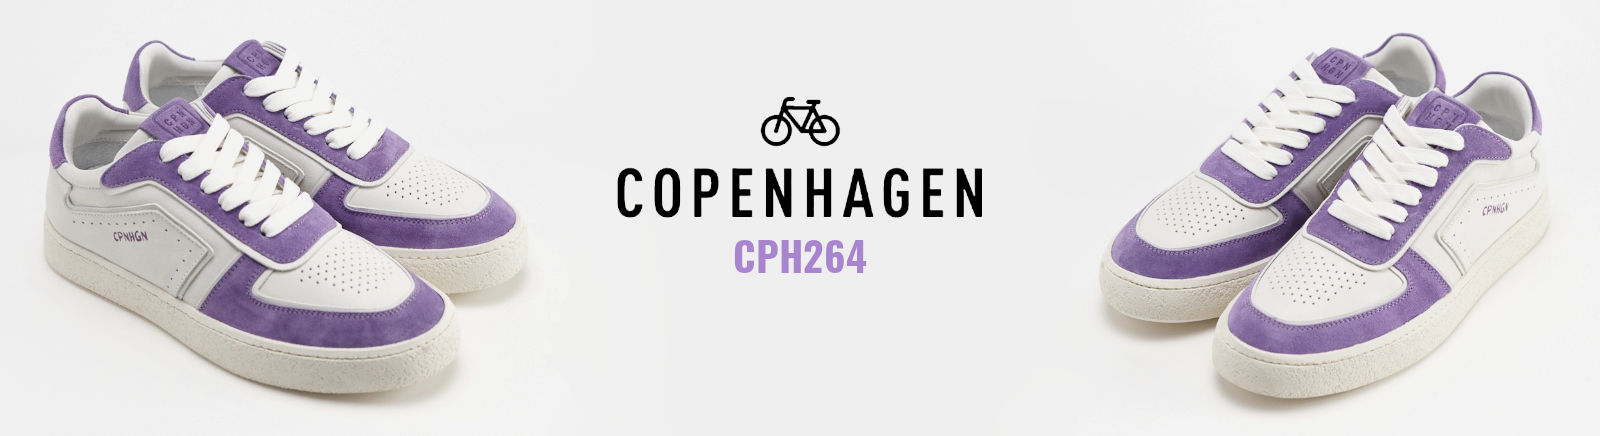 Juppen: Copenhagen Klassische Stiefeletten für Herren aus Leder online shoppen